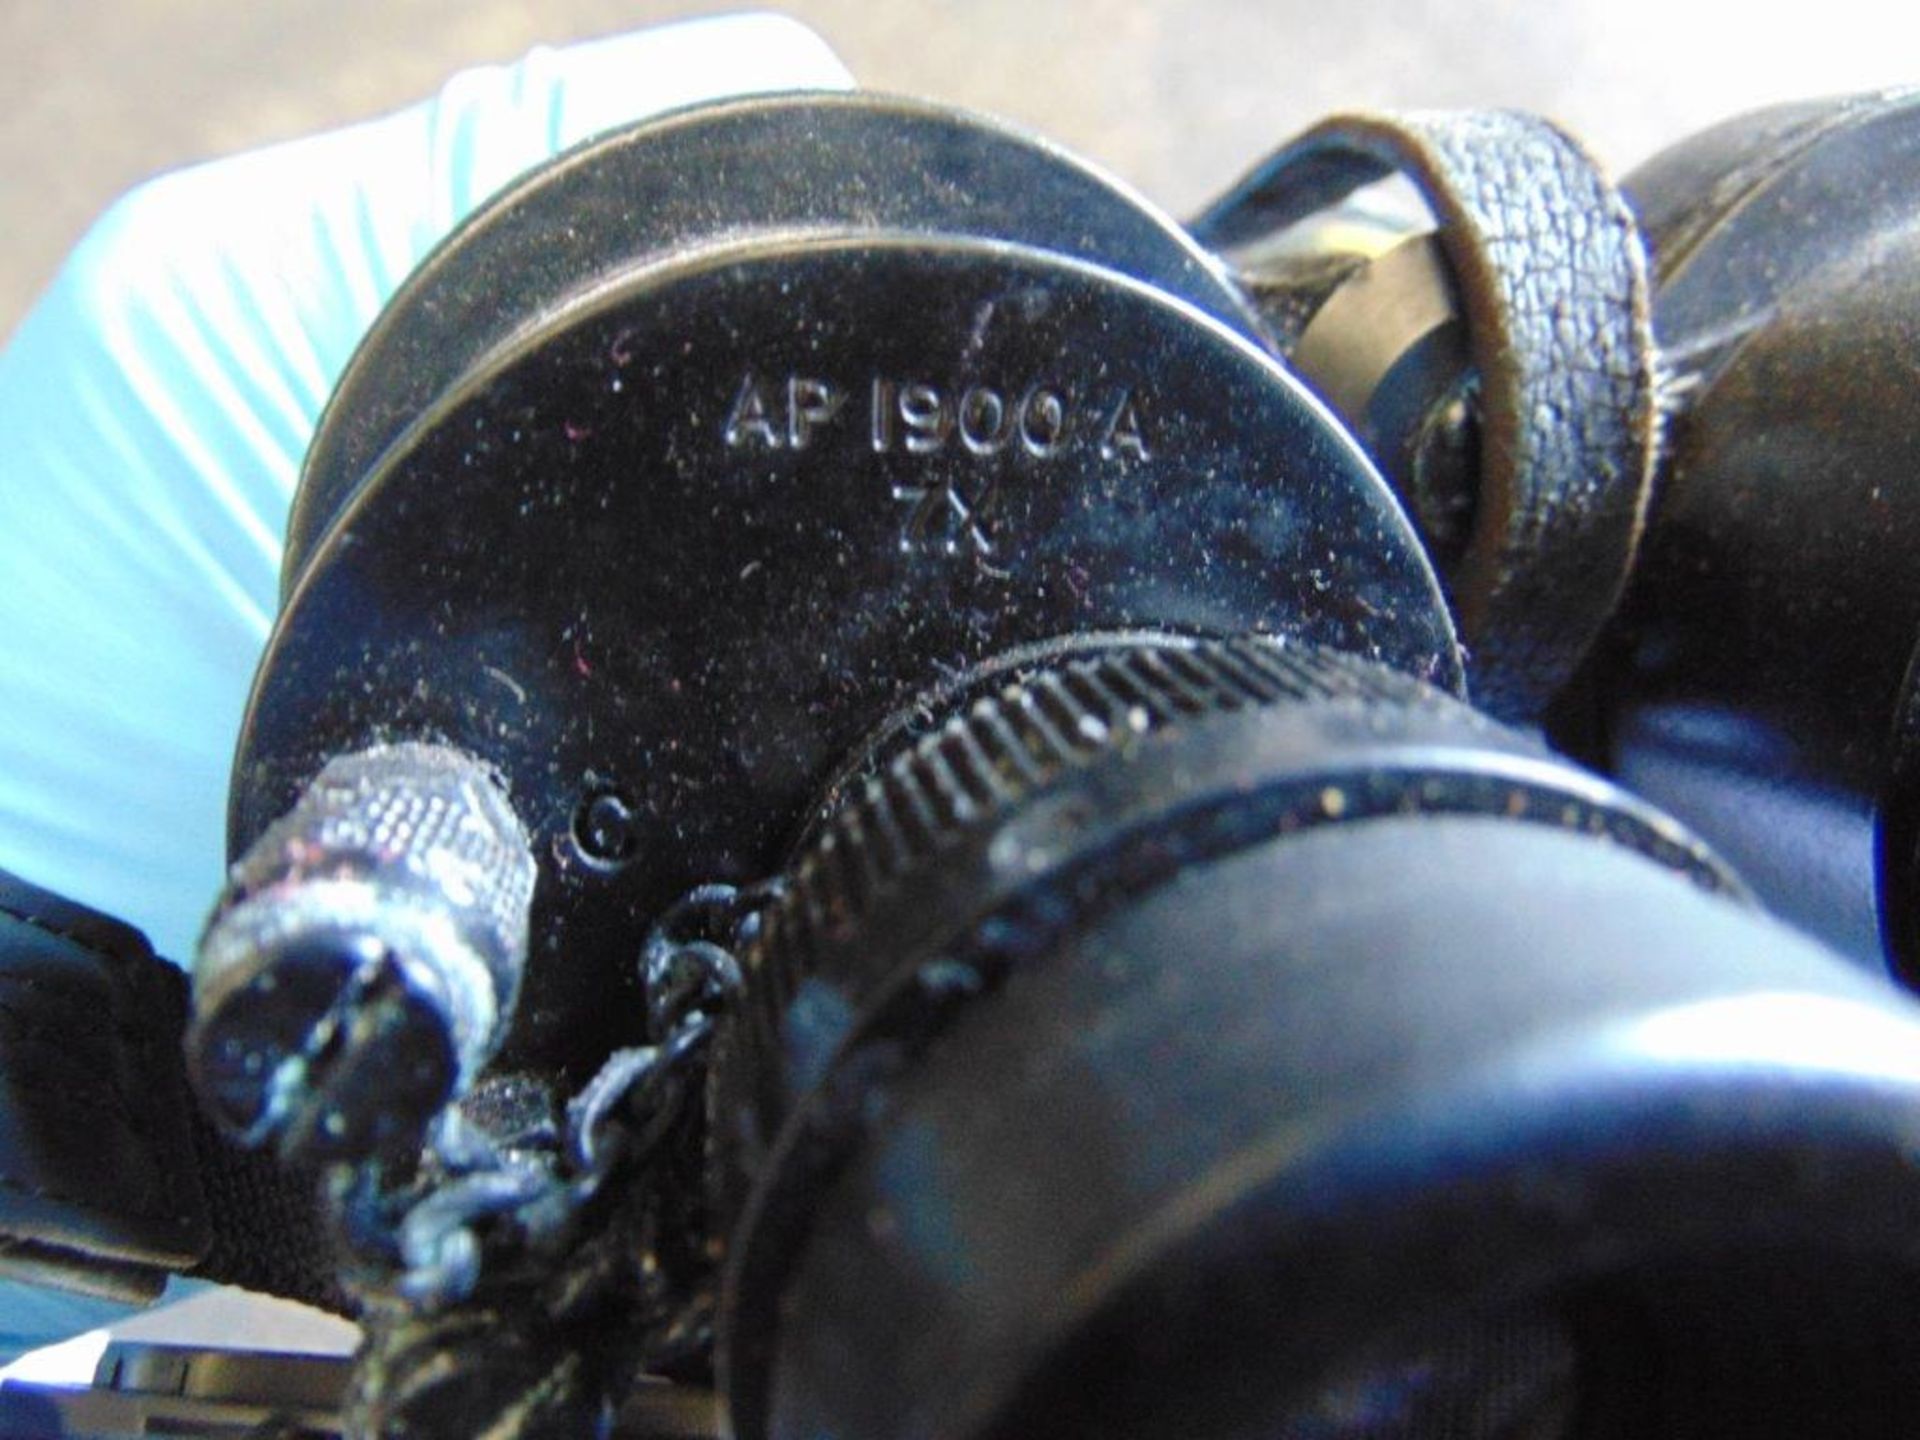 Royal Navy AP 1900 A 7 x Binoculars with original leather case - Bild 2 aus 5